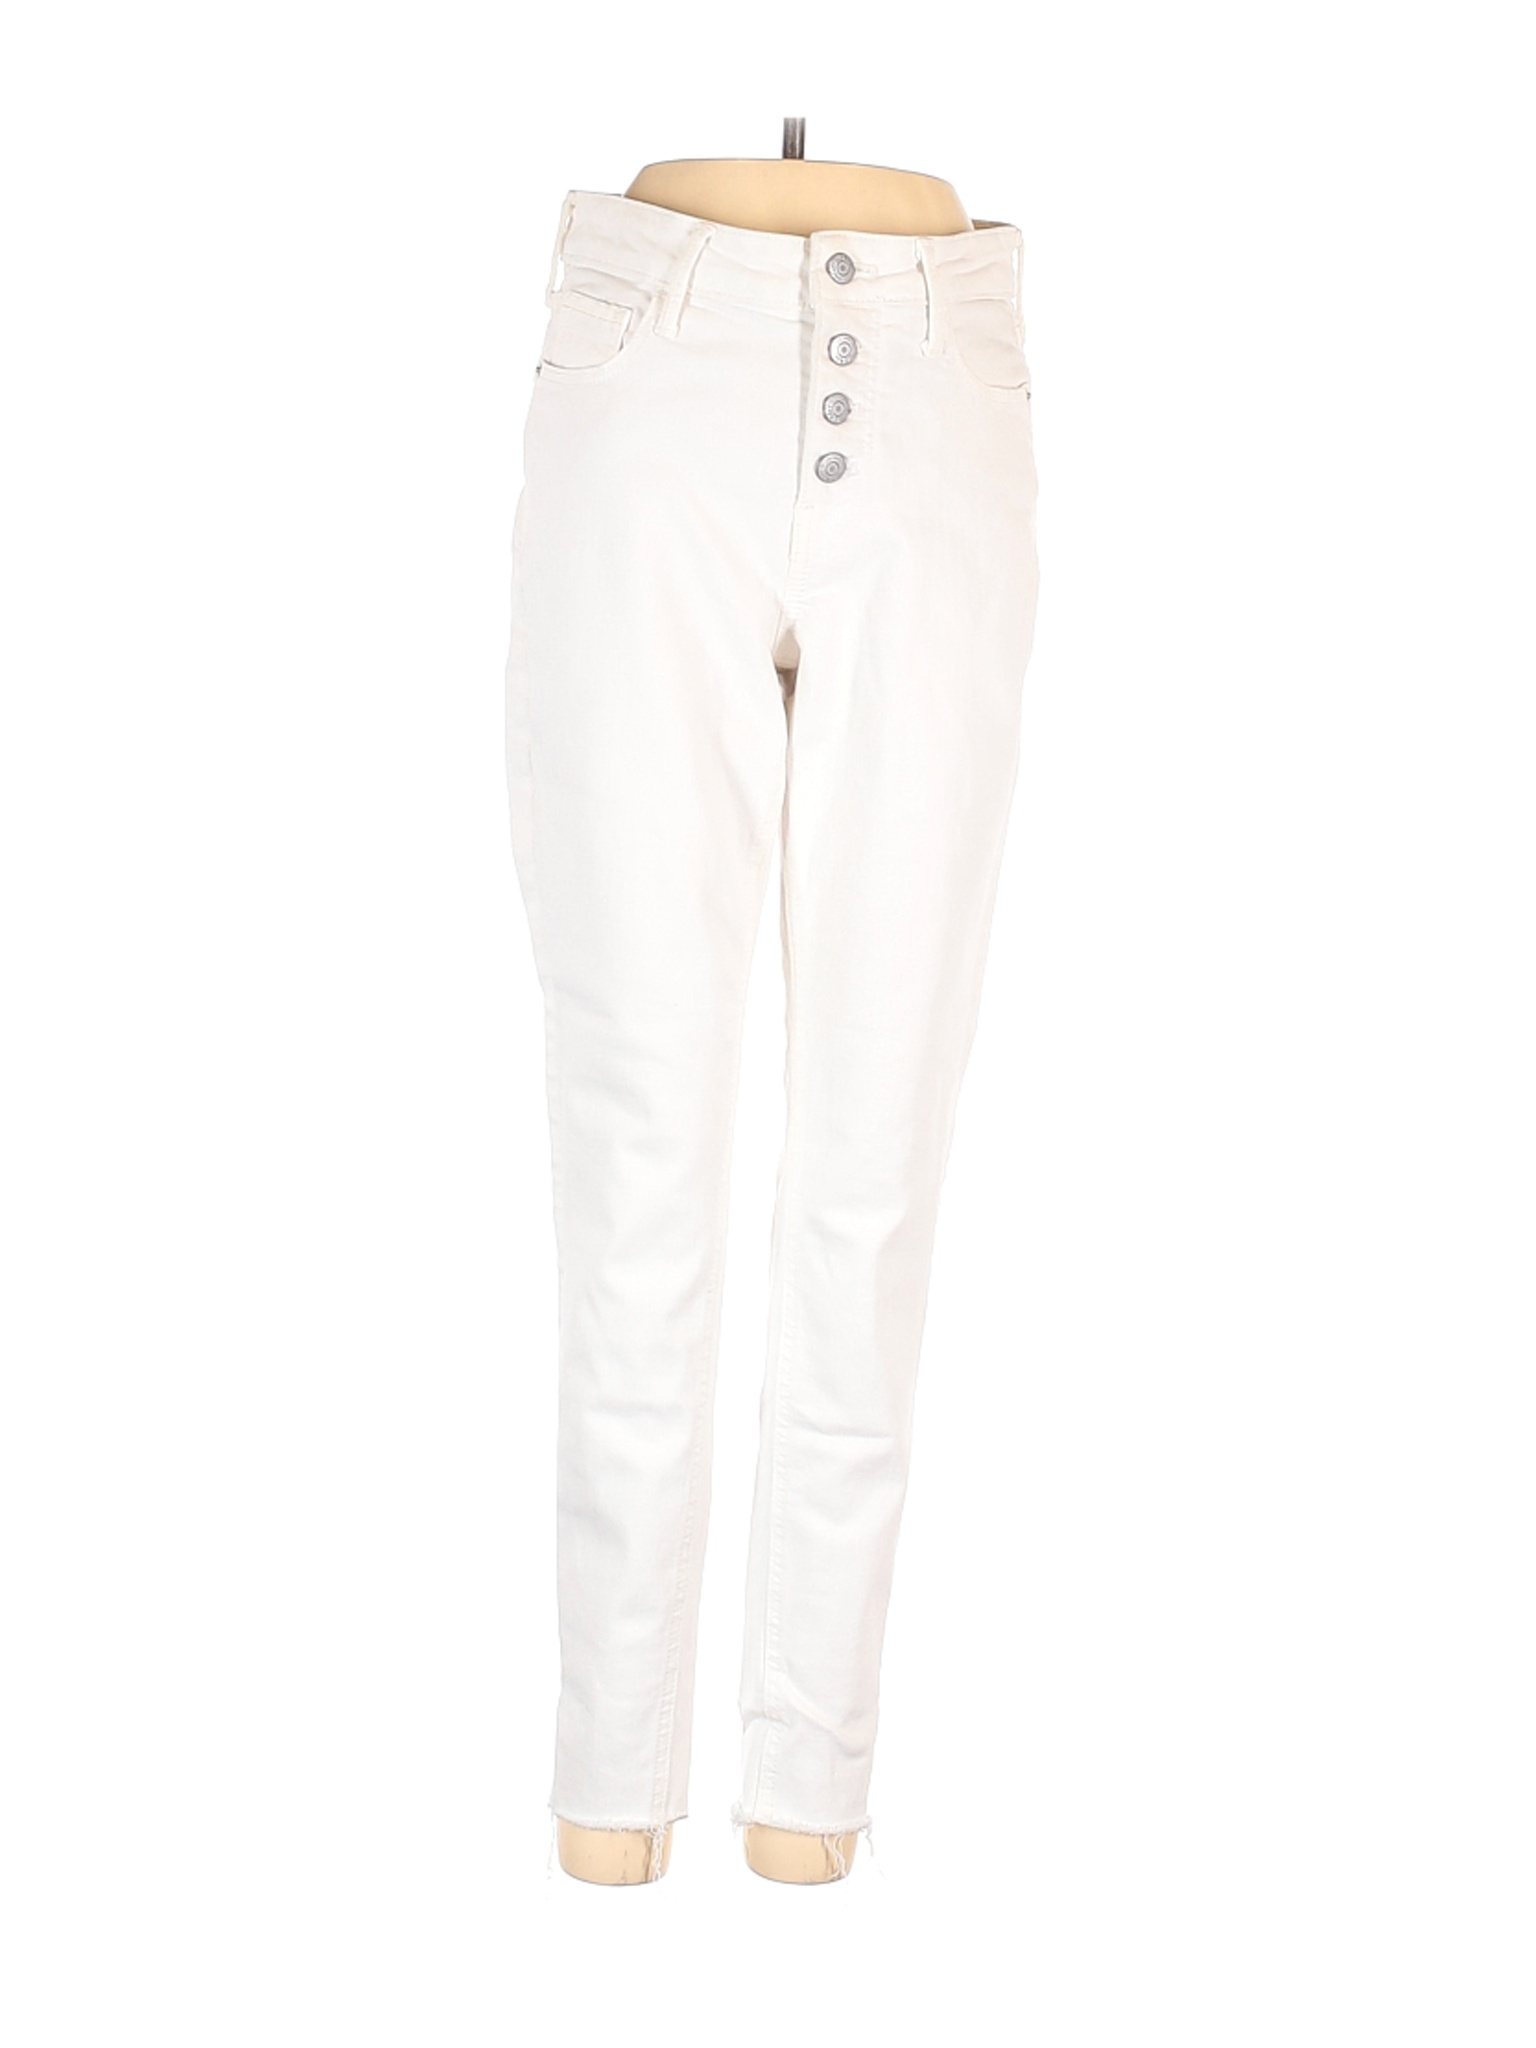 Old Navy Women White Jeans 0 | eBay